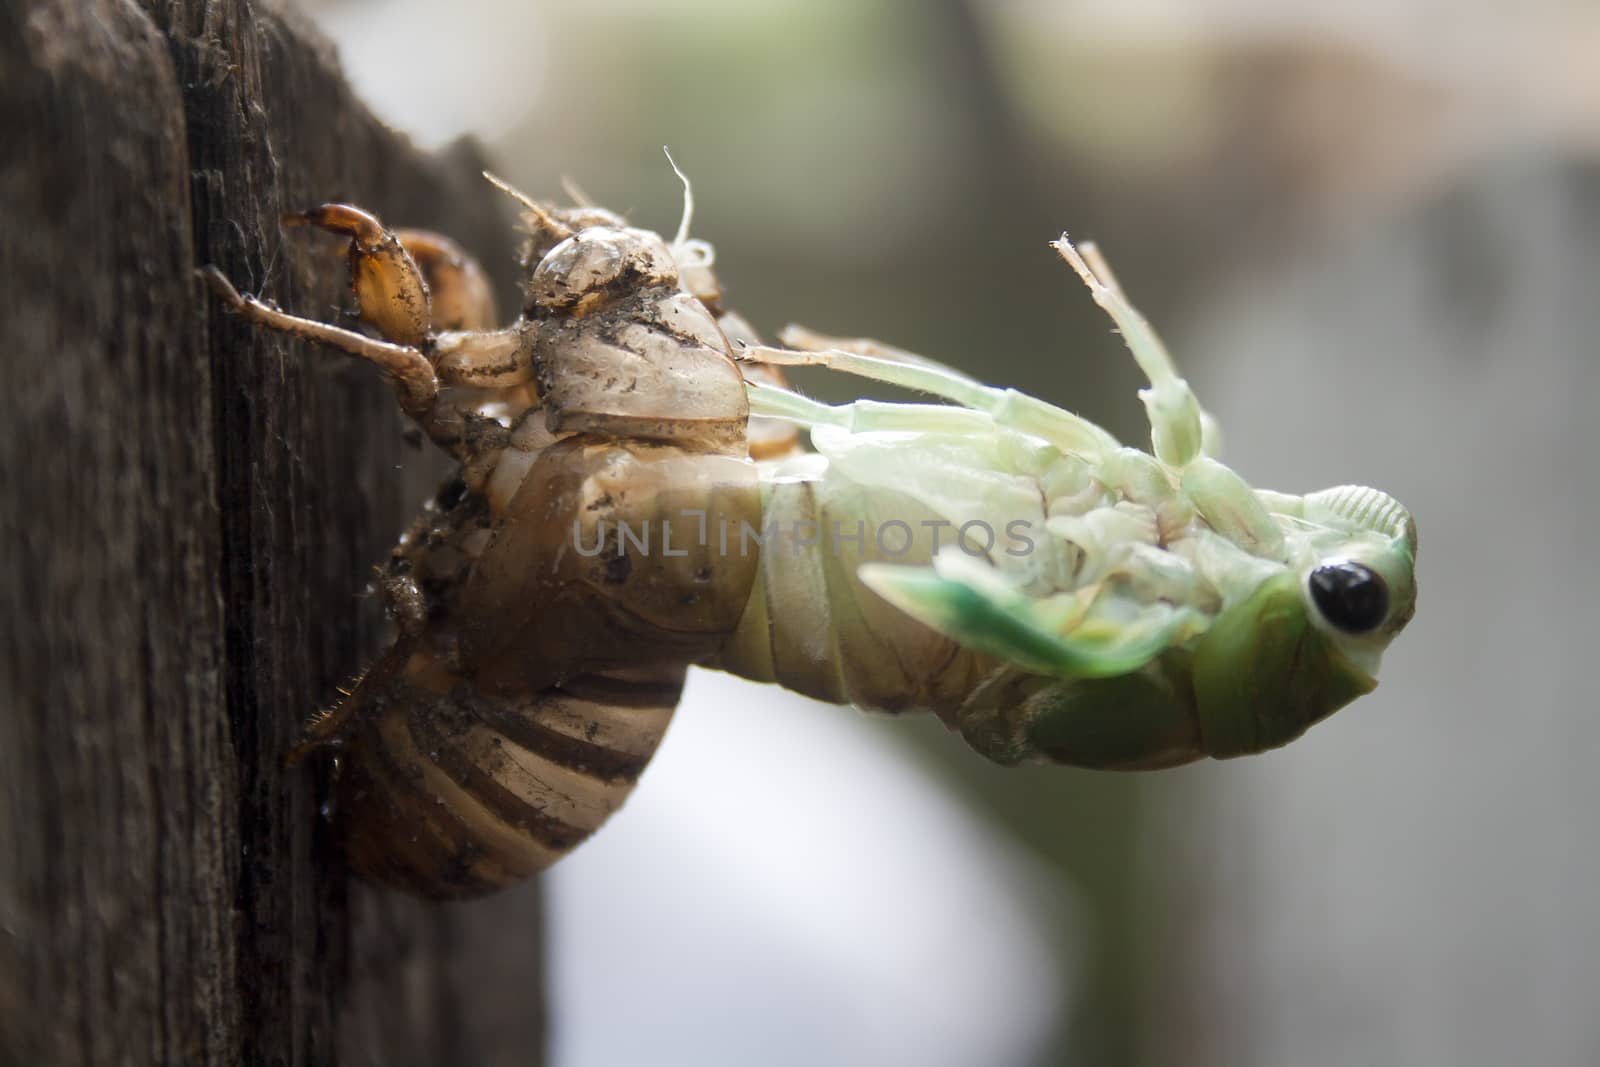 Molting Cicada by NikkiGensert